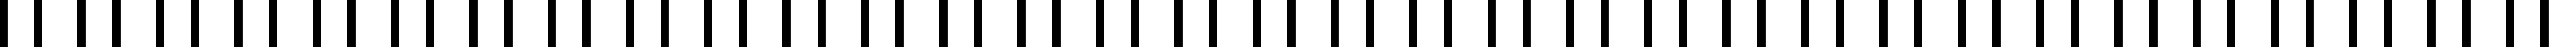 Пример написания русского алфавита шрифтом Calvin and Hobbes Outline